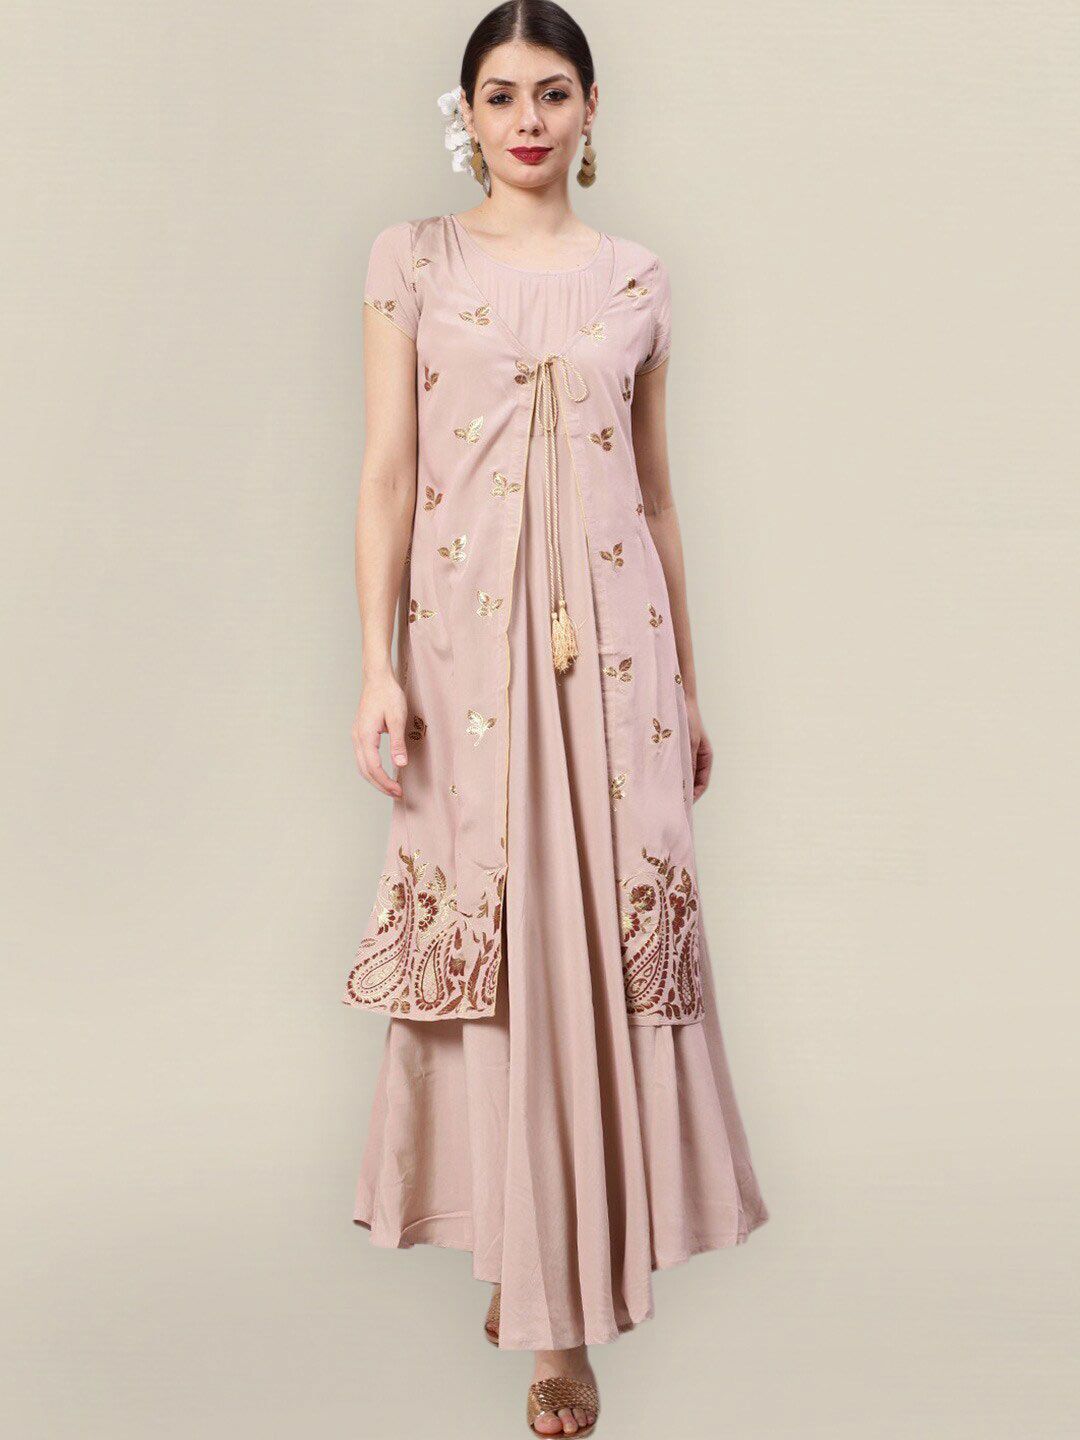 Sangria Nude-Coloured Floral Ethnic Maxi Dress Price in India